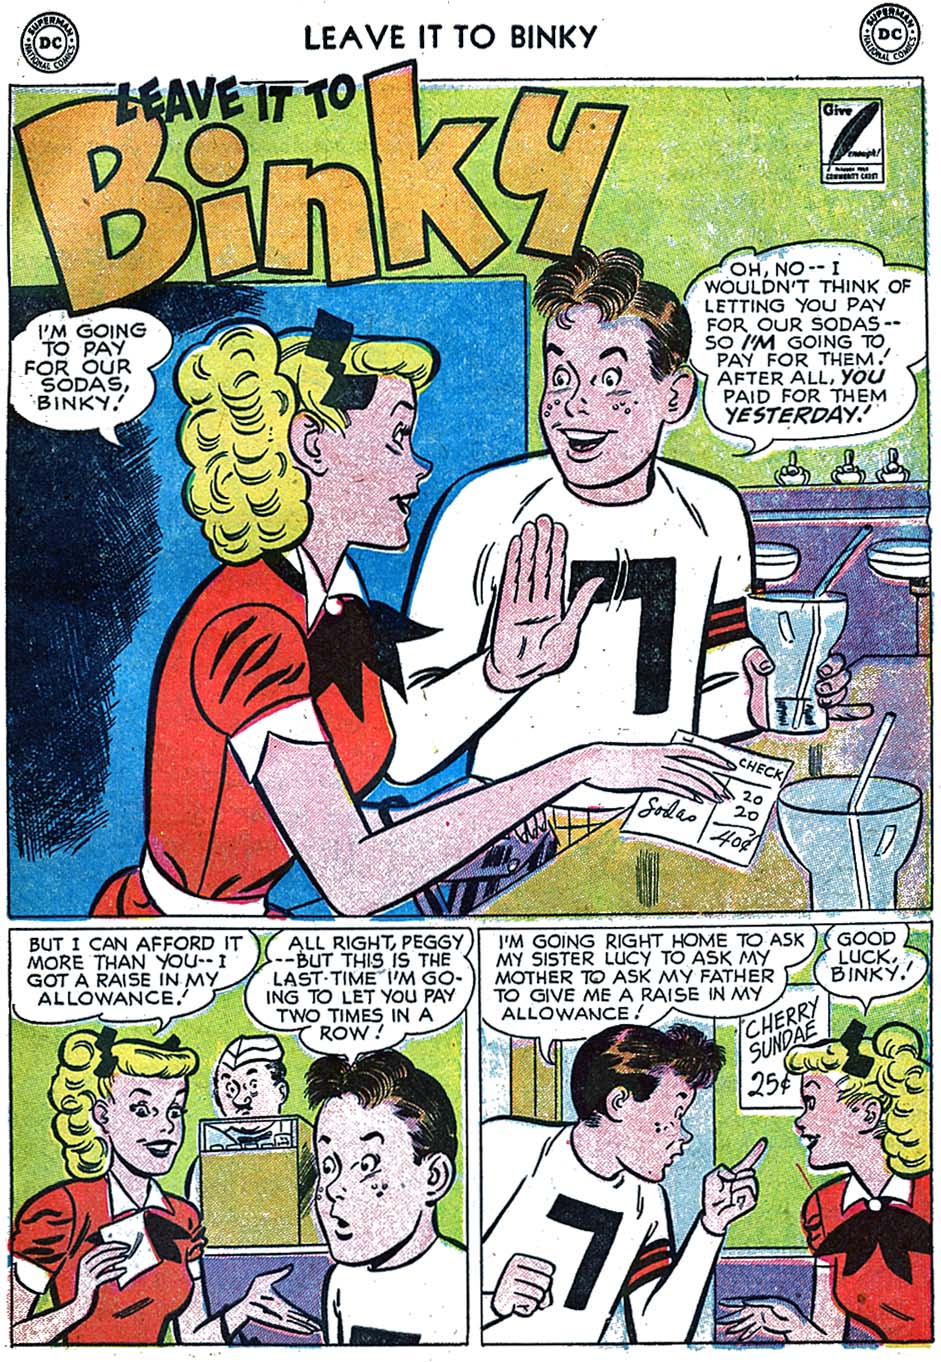 Read online Leave it to Binky comic -  Issue #29 - 37